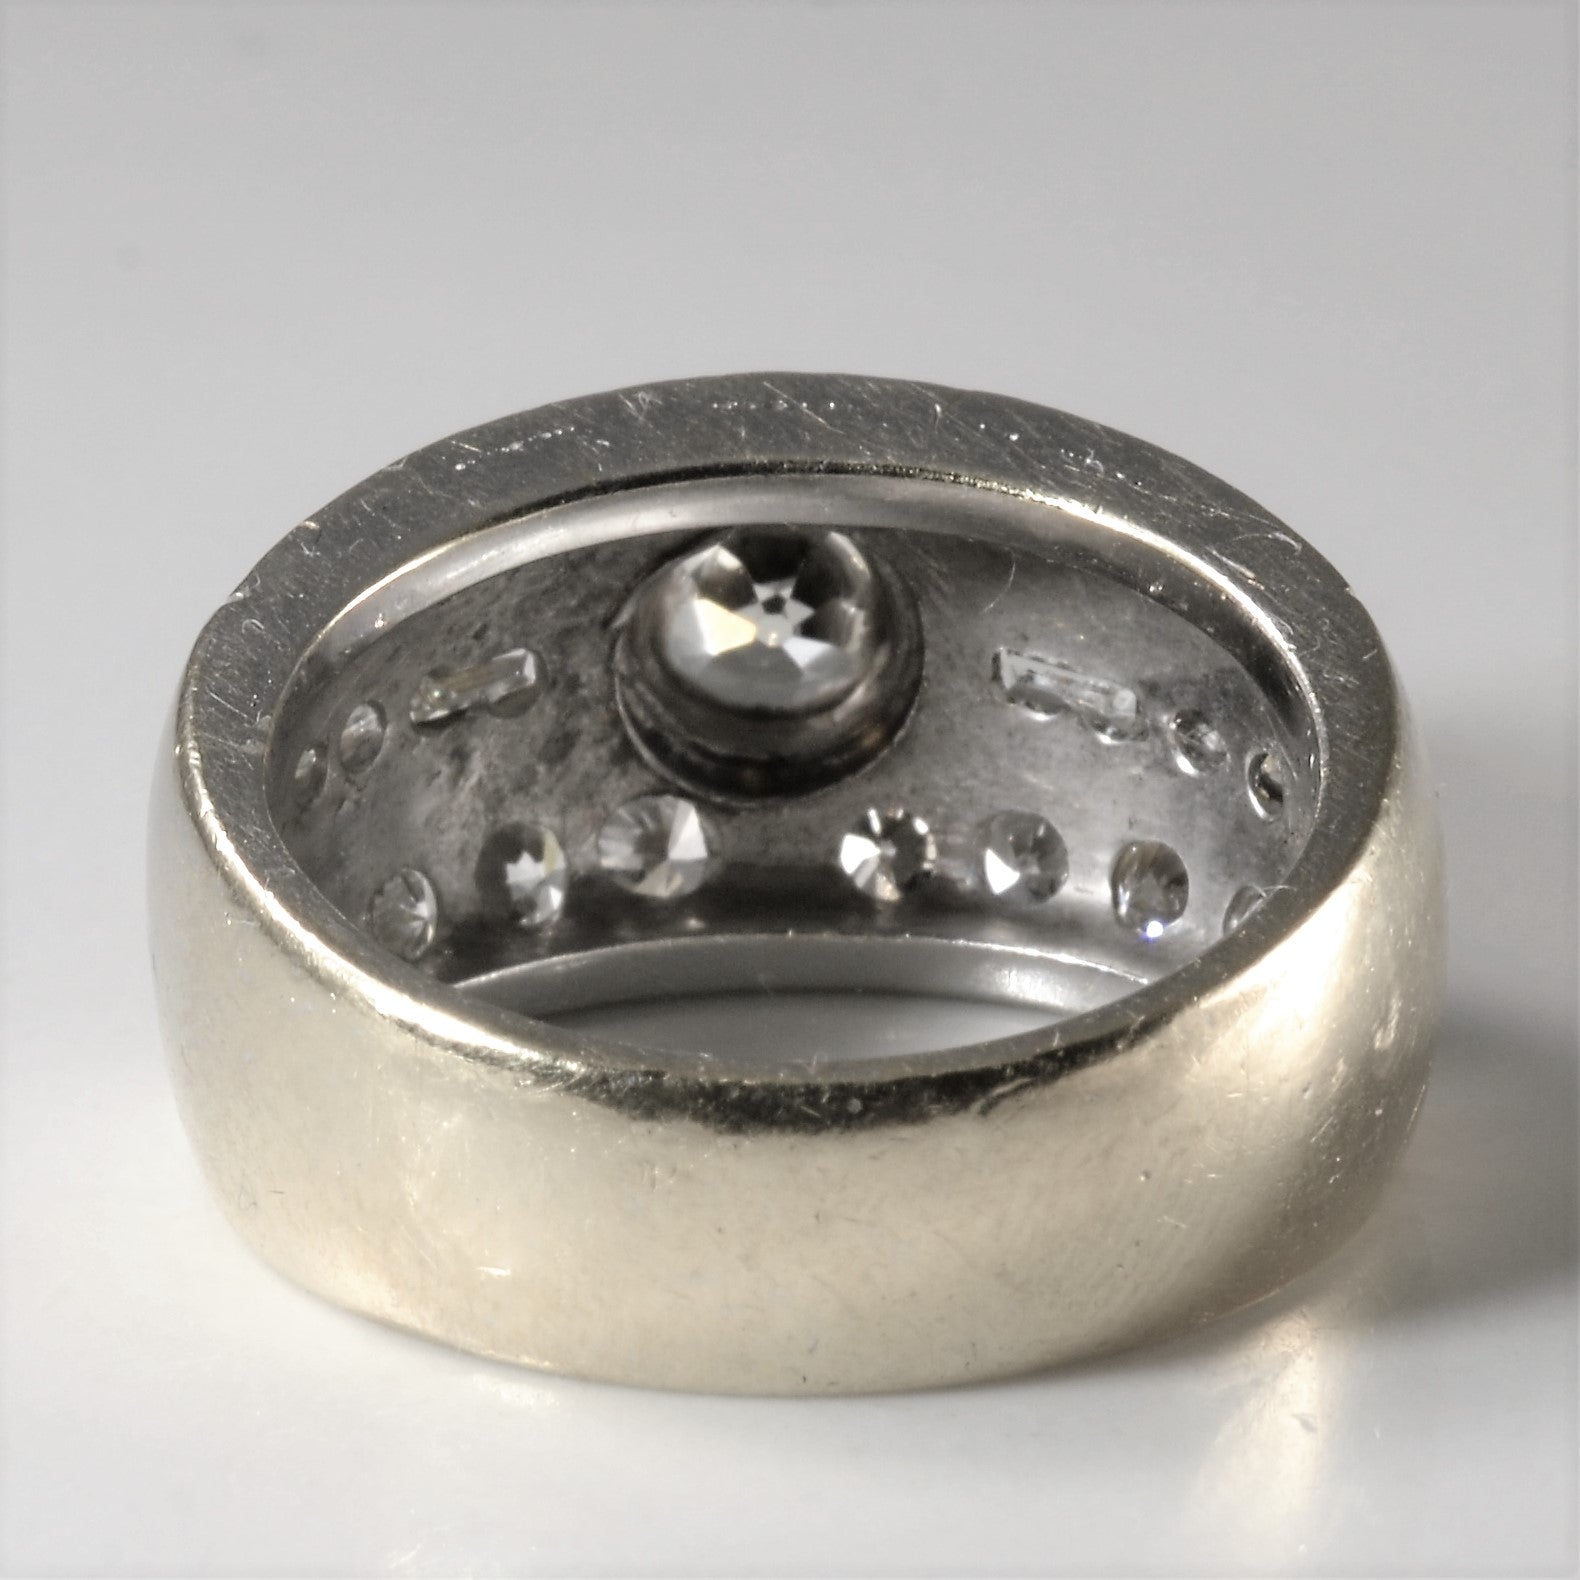 Modified Art Deco Diamond Ring | 1.88tw | SZ 6.5 |